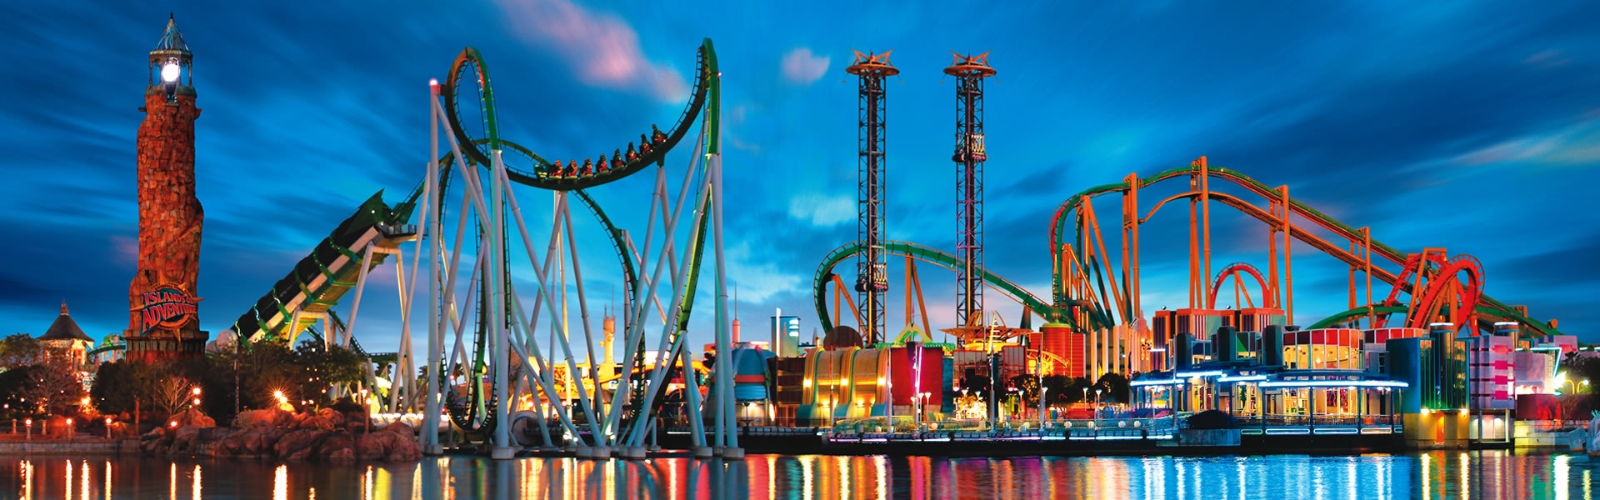 Universal's Islands Of Adventure | Universal Orlando Resort Attractions  2023/2024 | Virgin Atlantic Holidays